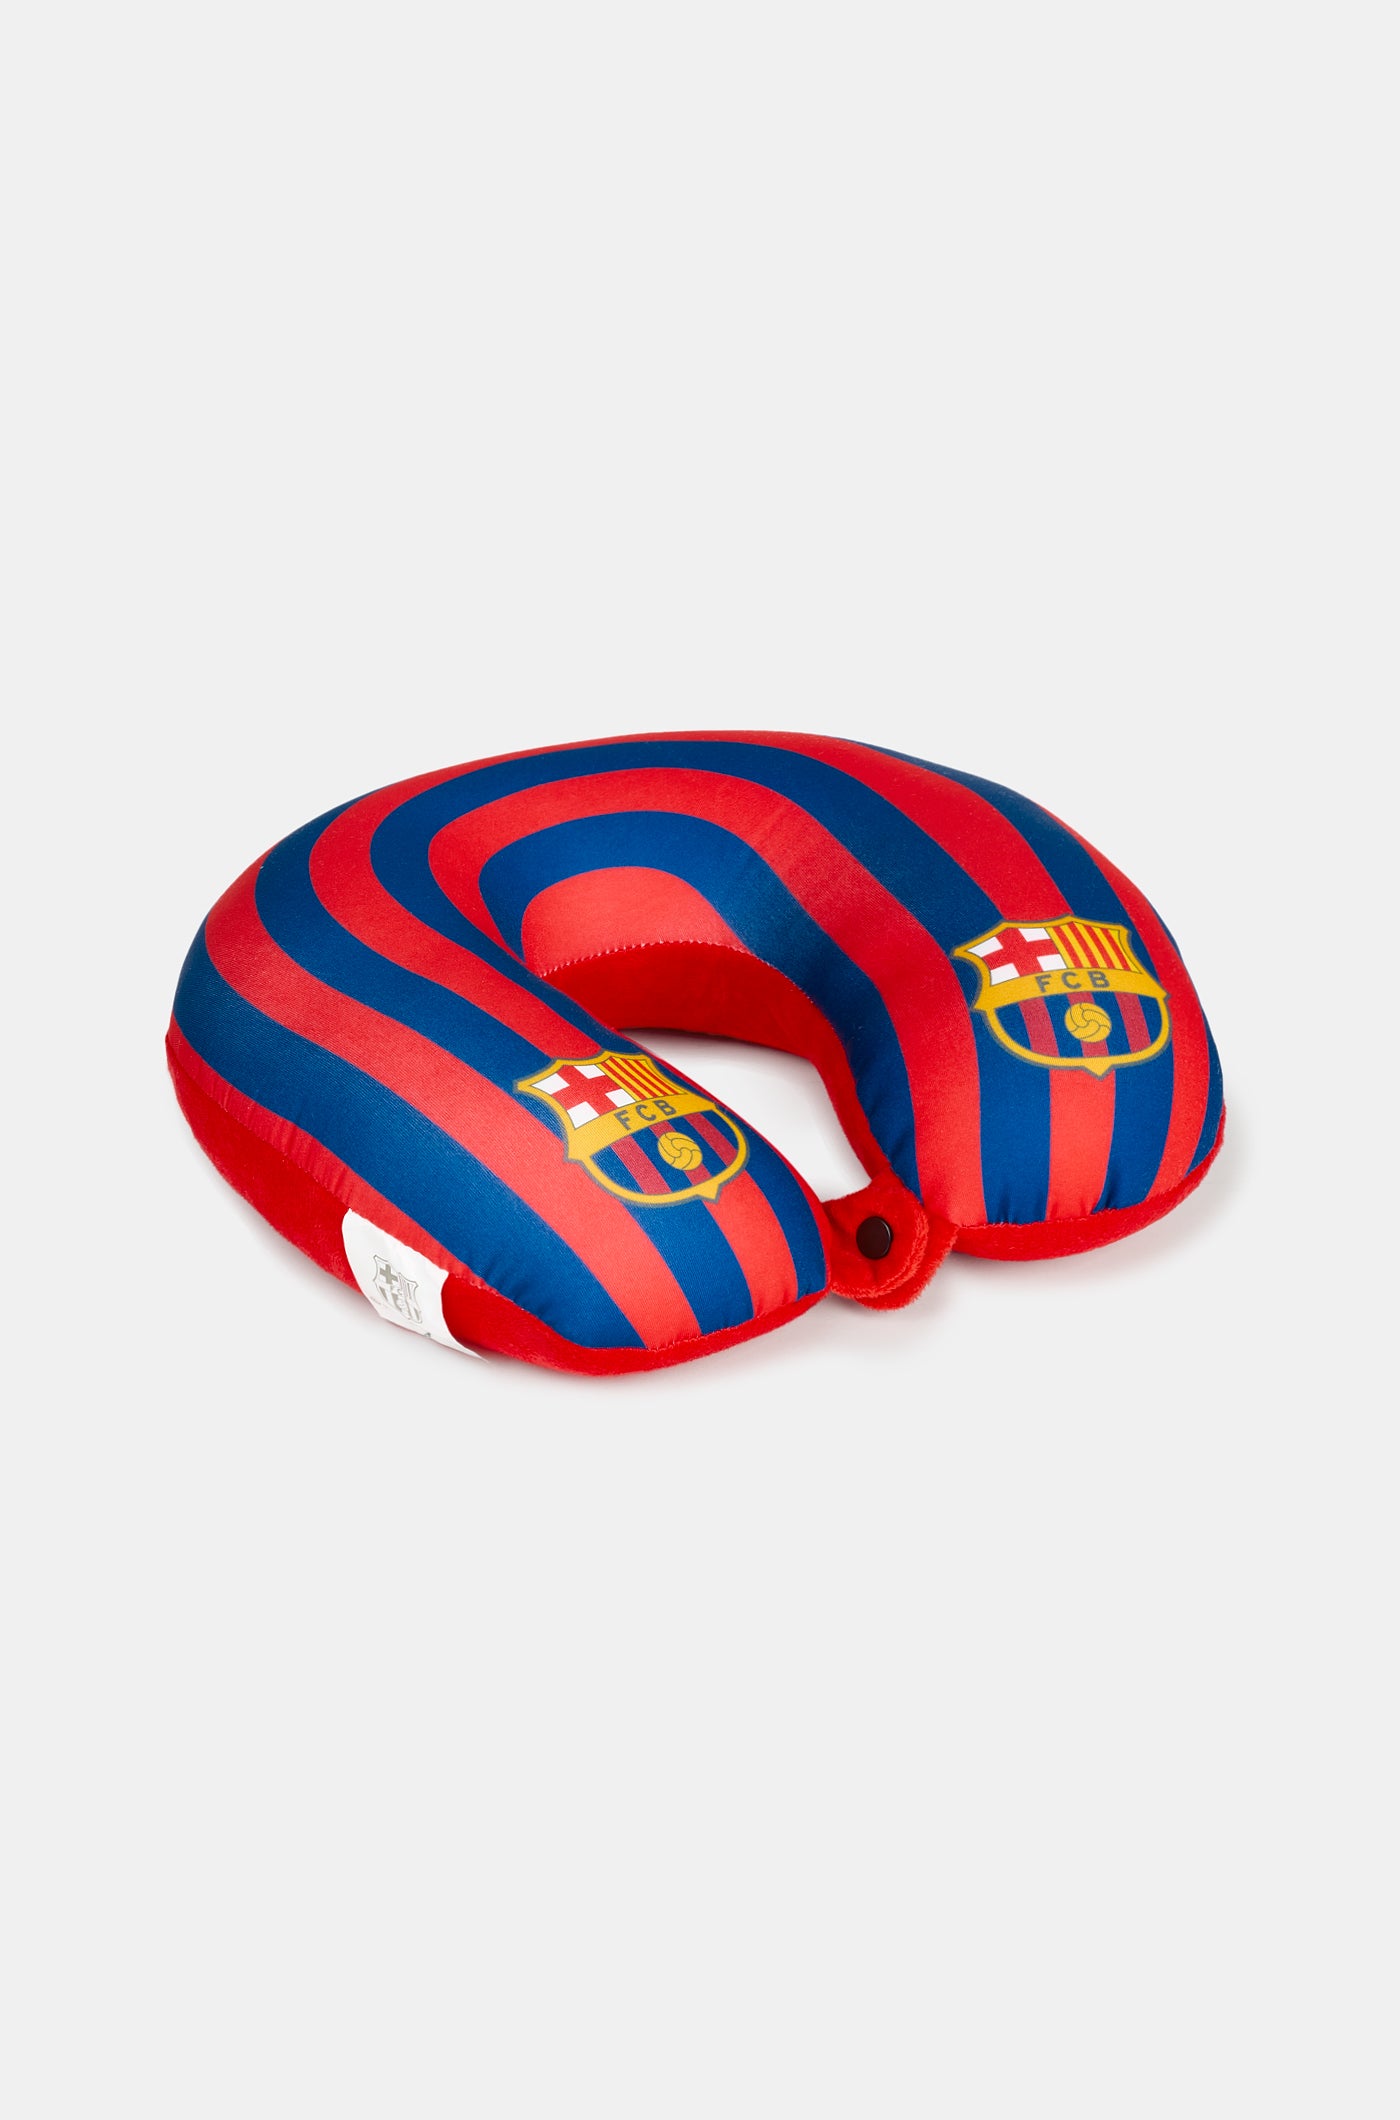  Coixí cervical FC Barcelona